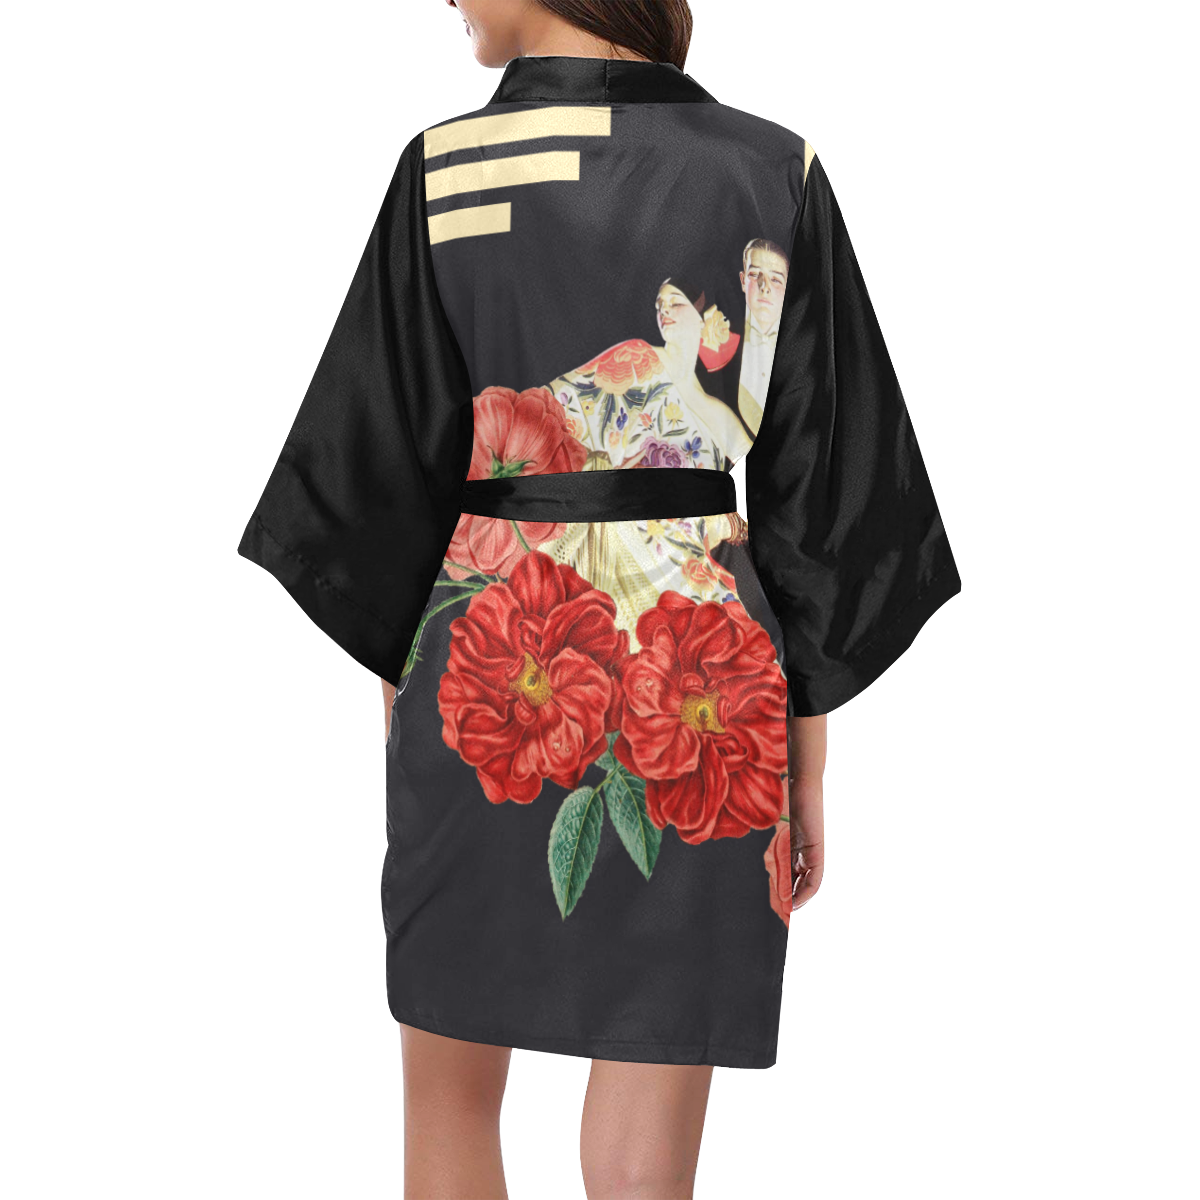 Bohème Sauvage Dancer Kimono Robe